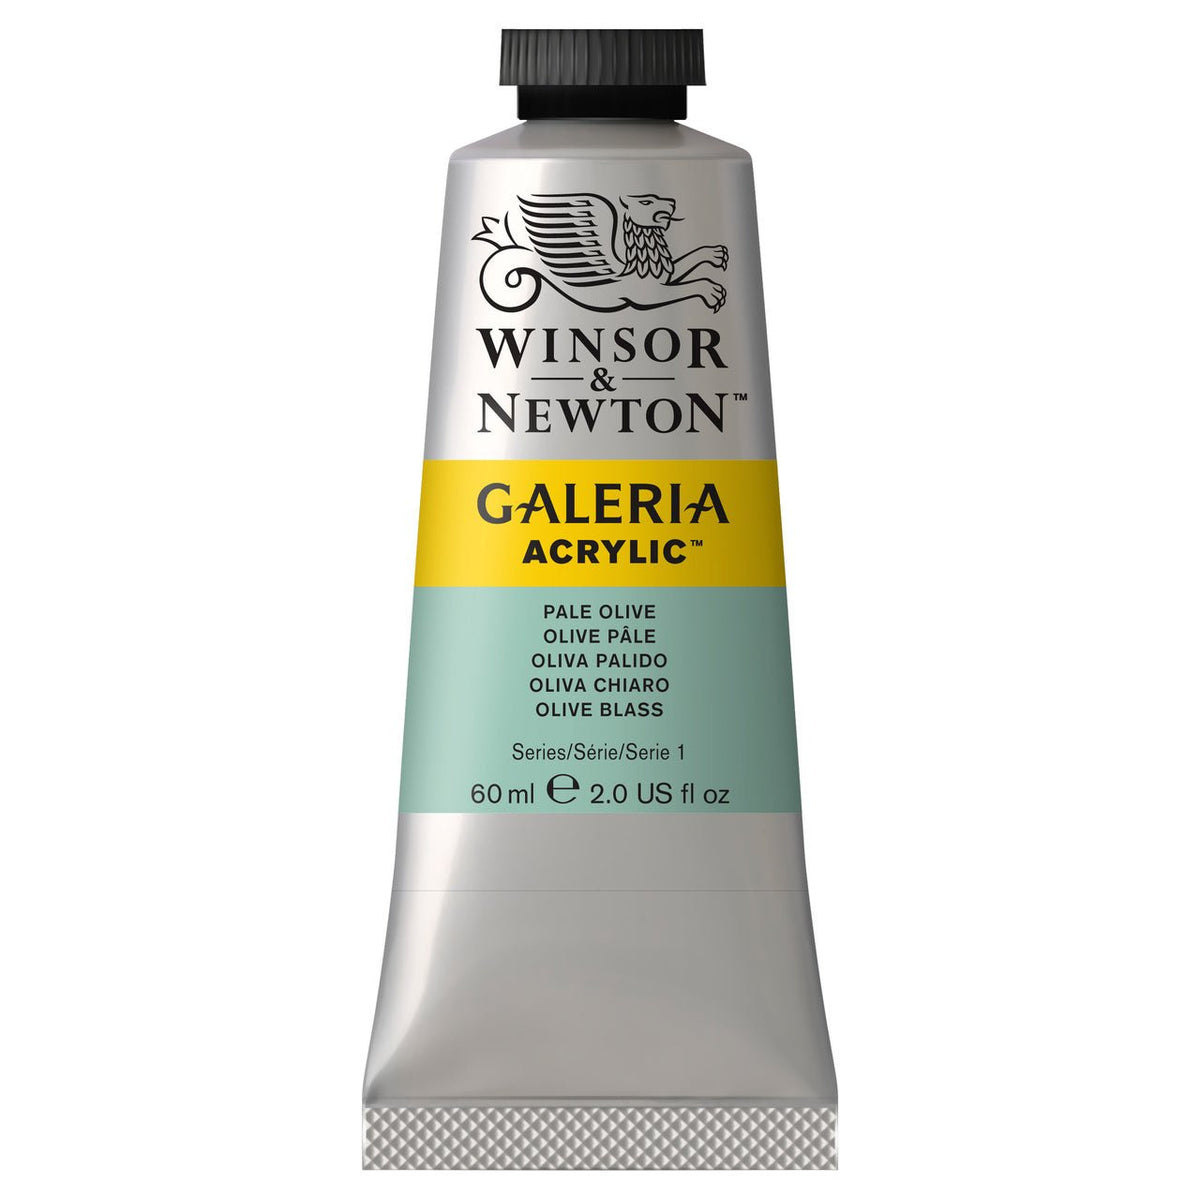 Winsor & Newton Galeria Acrylic Pale Olive 60 ml - merriartist.com